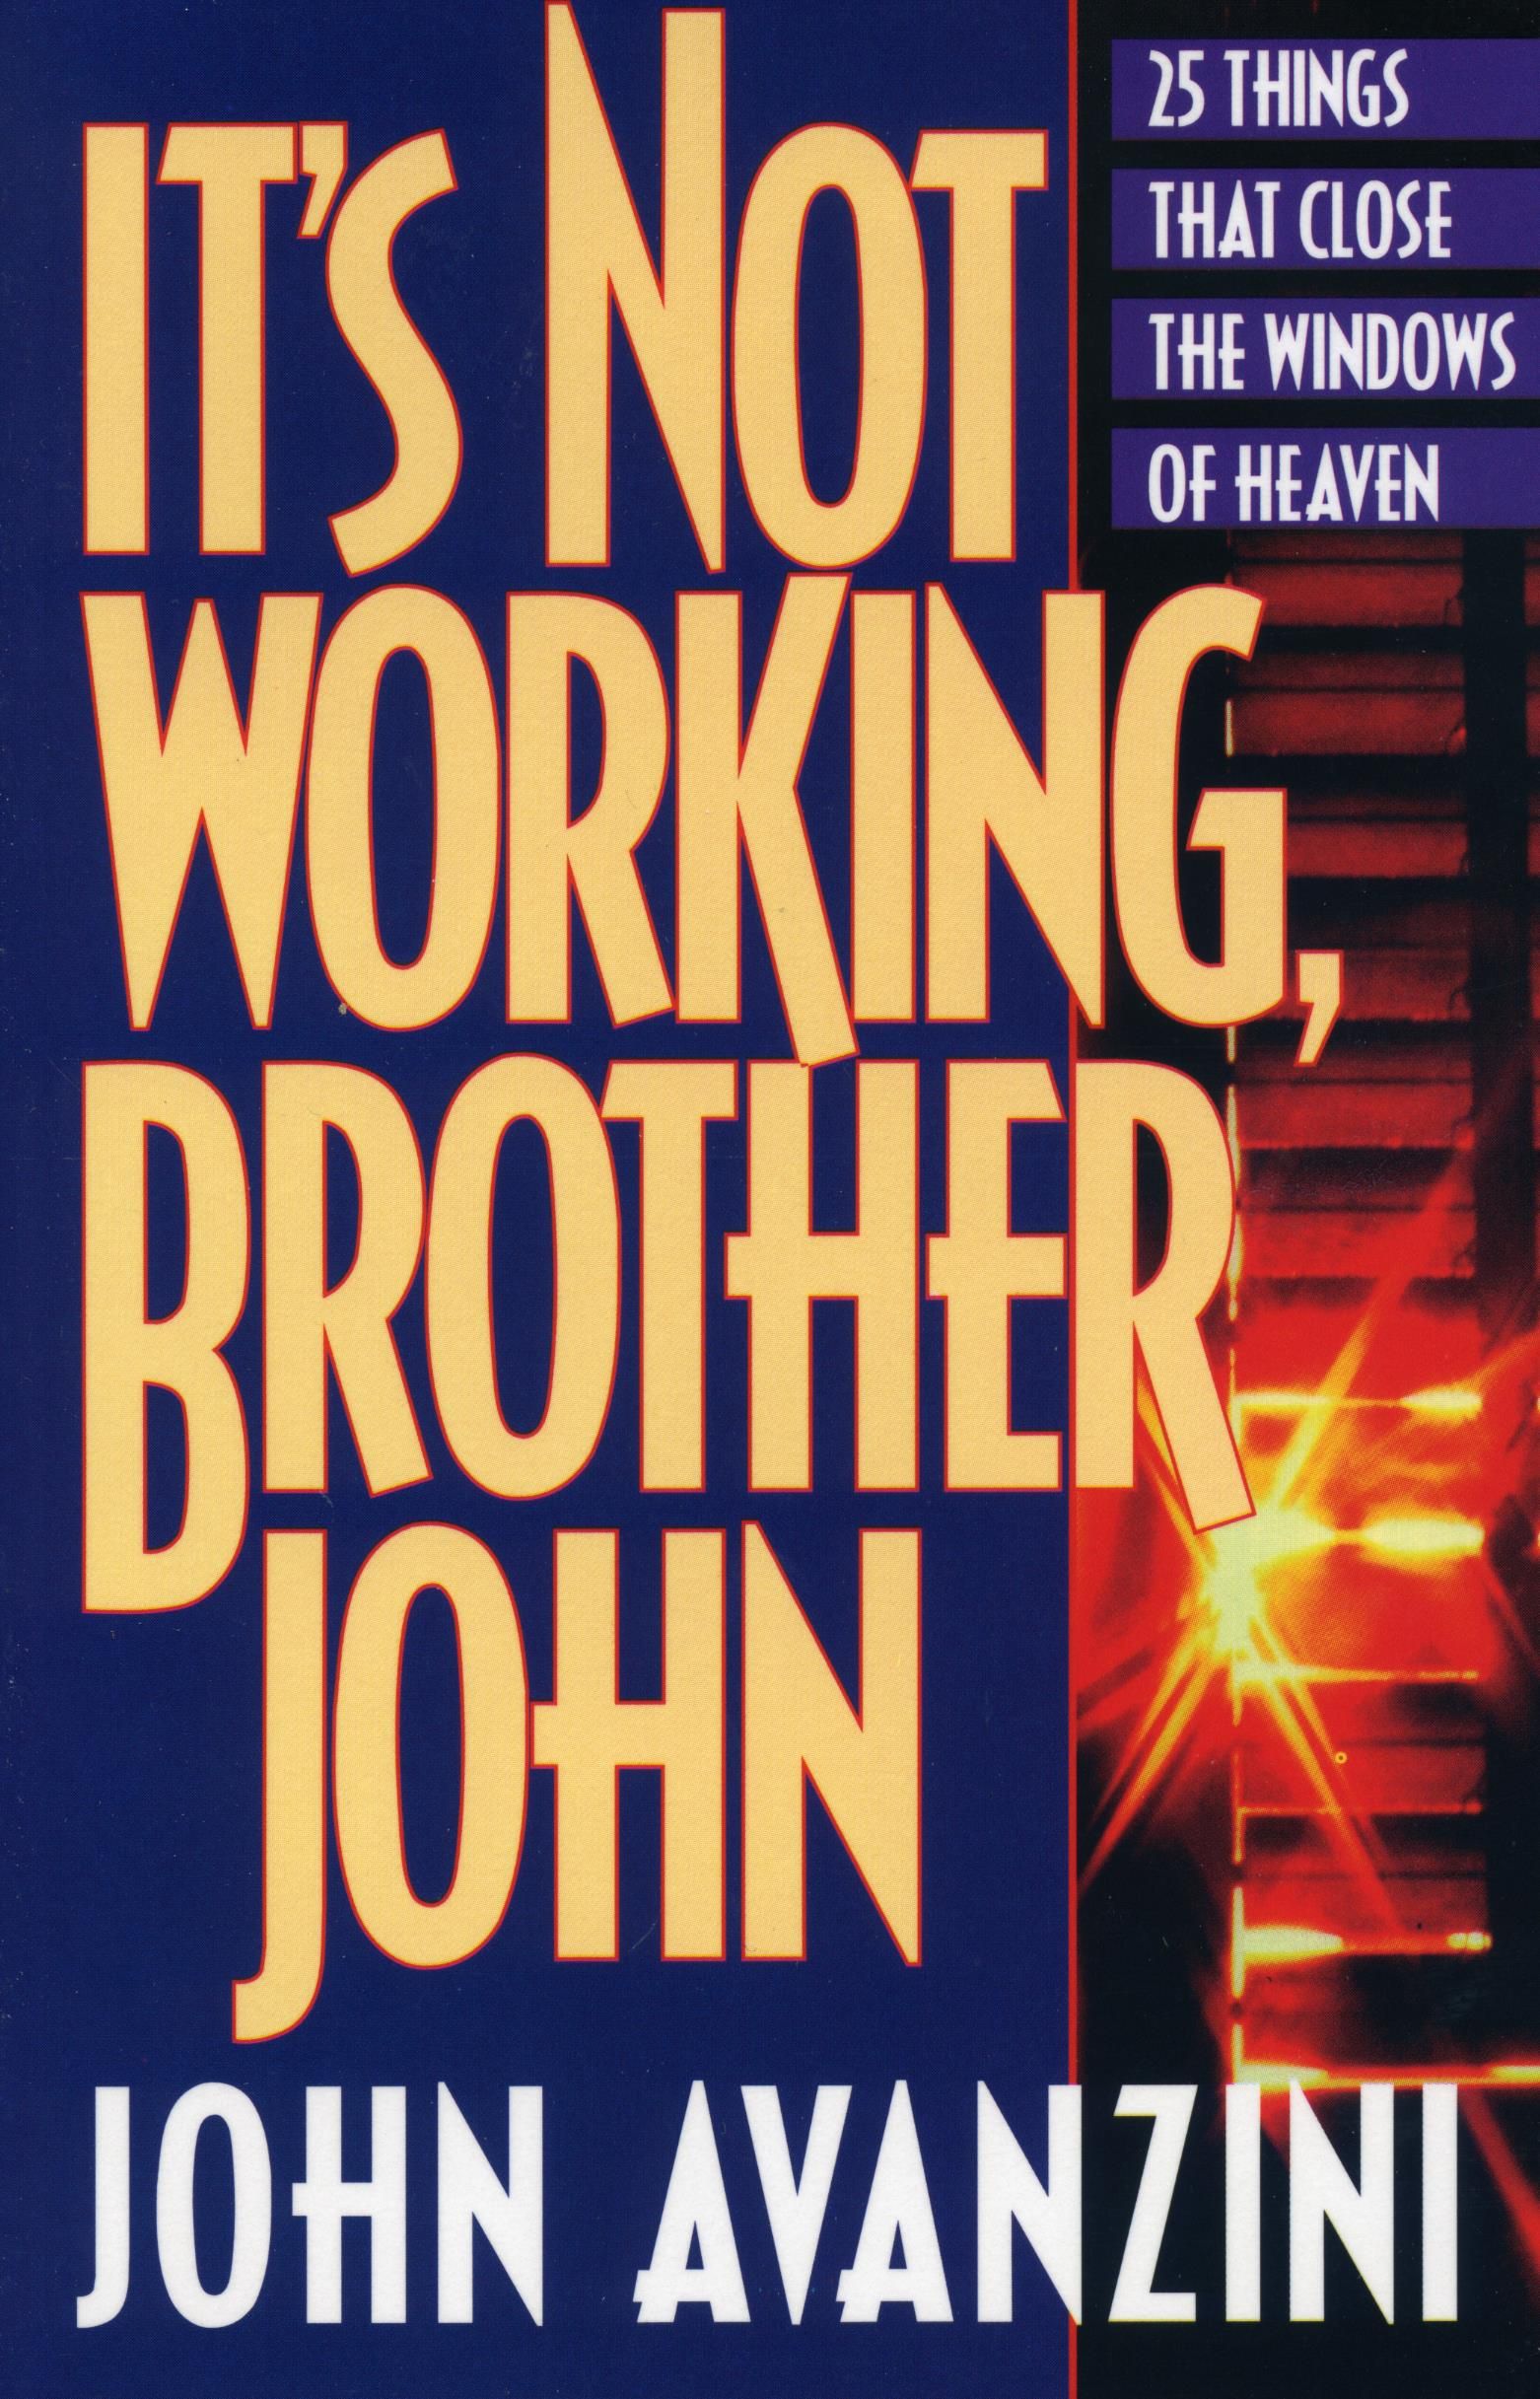 Englische Bücher - John Avanzini: It's Not Working Brother John!